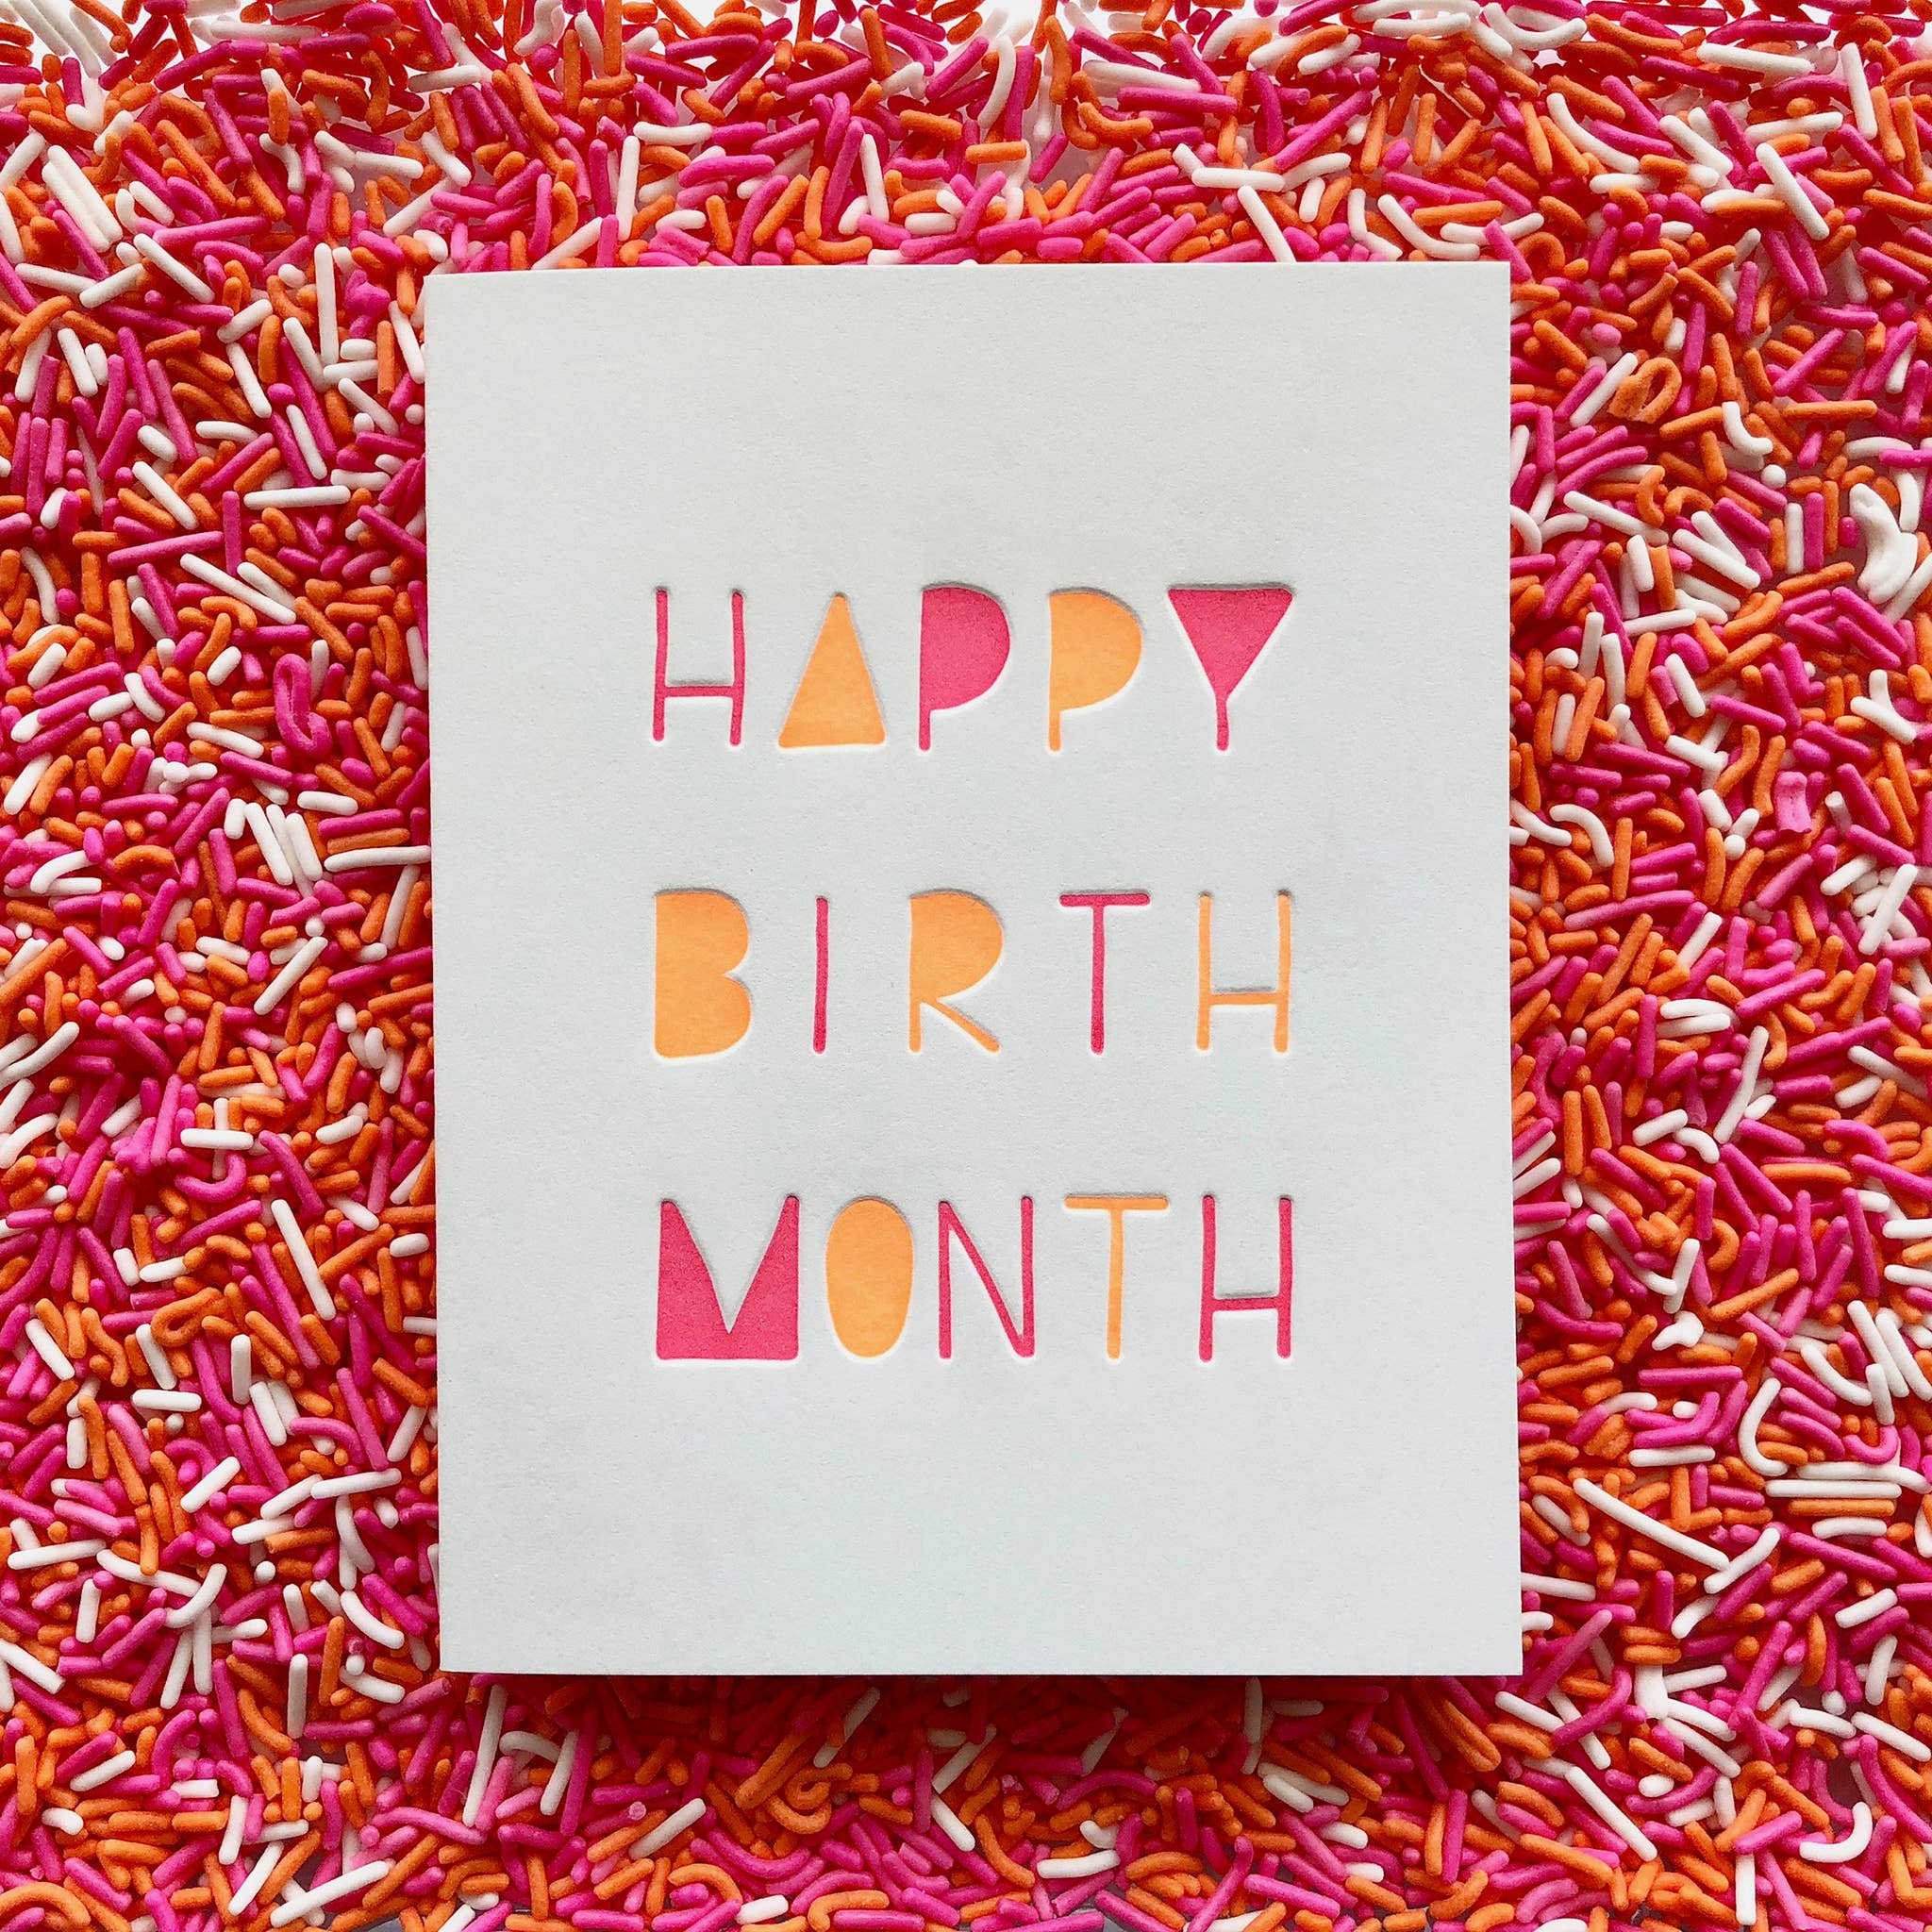 Happy Birth Month - Birthday card